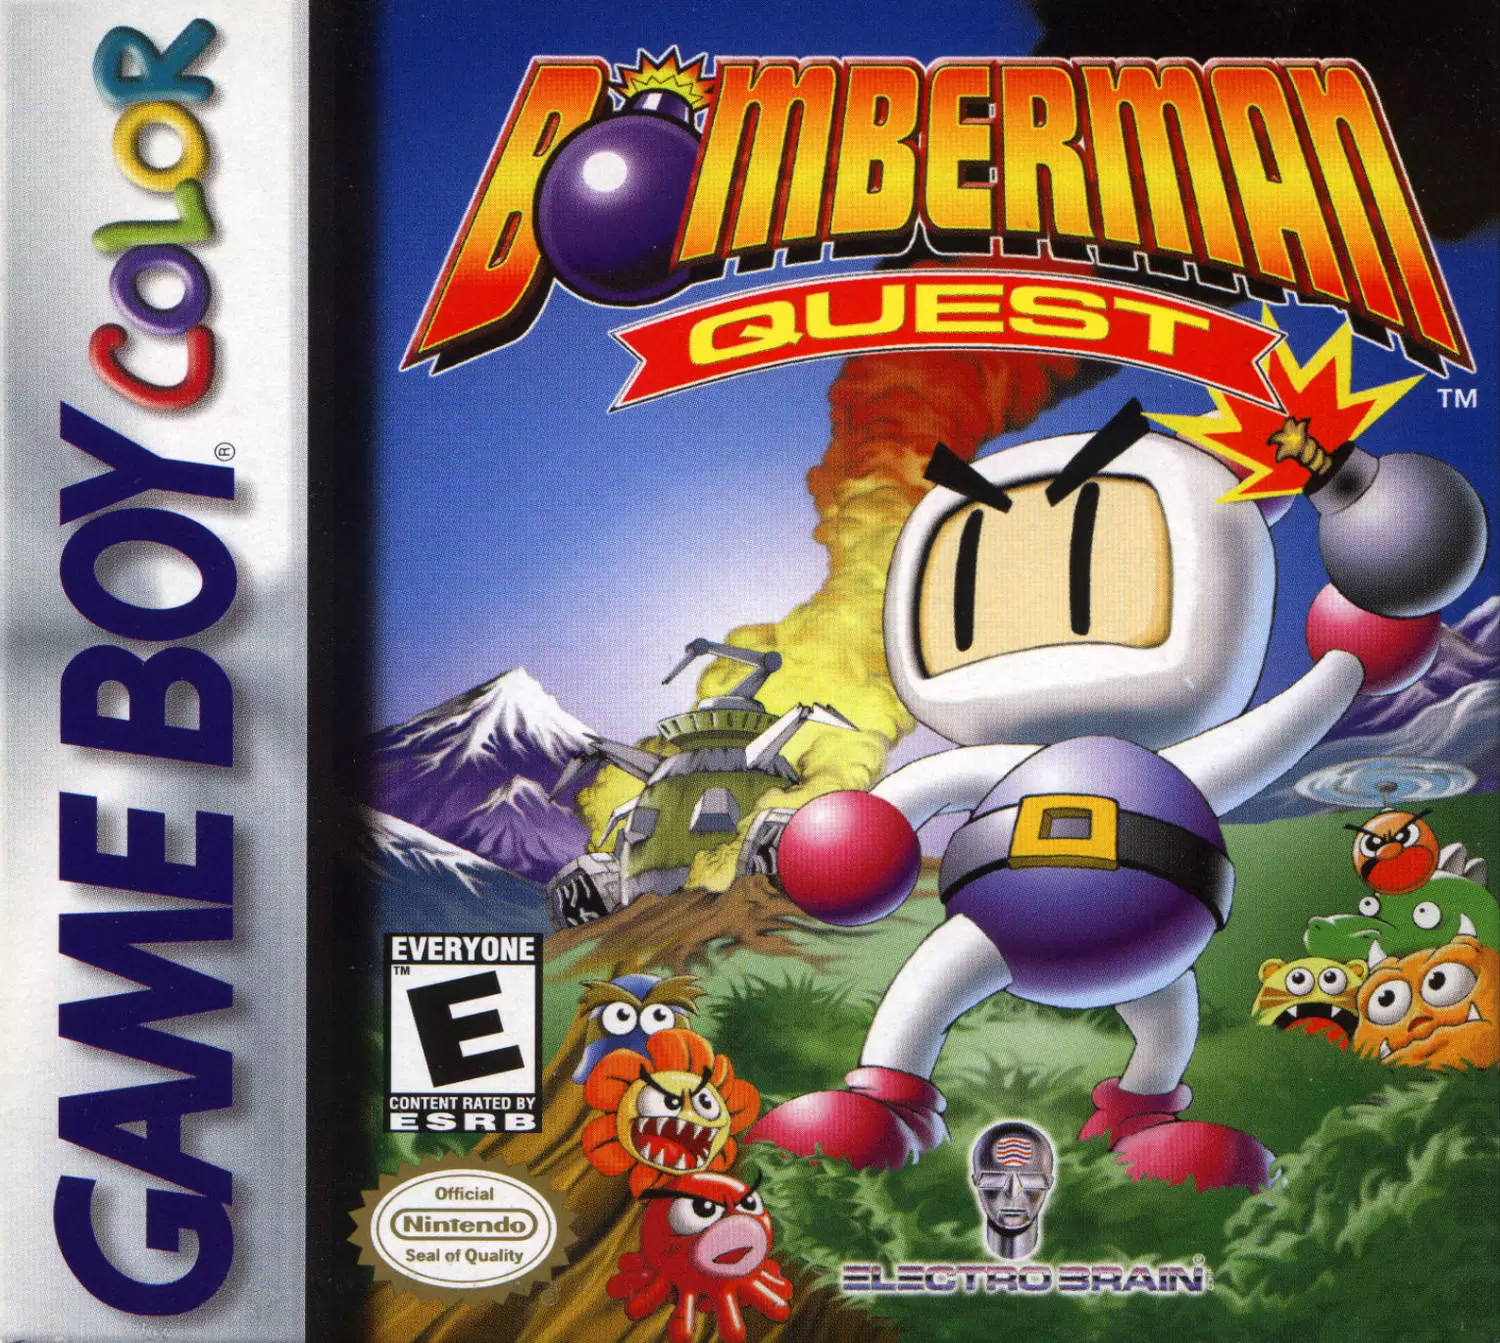 Game Boy Color Games - Bomberman Quest